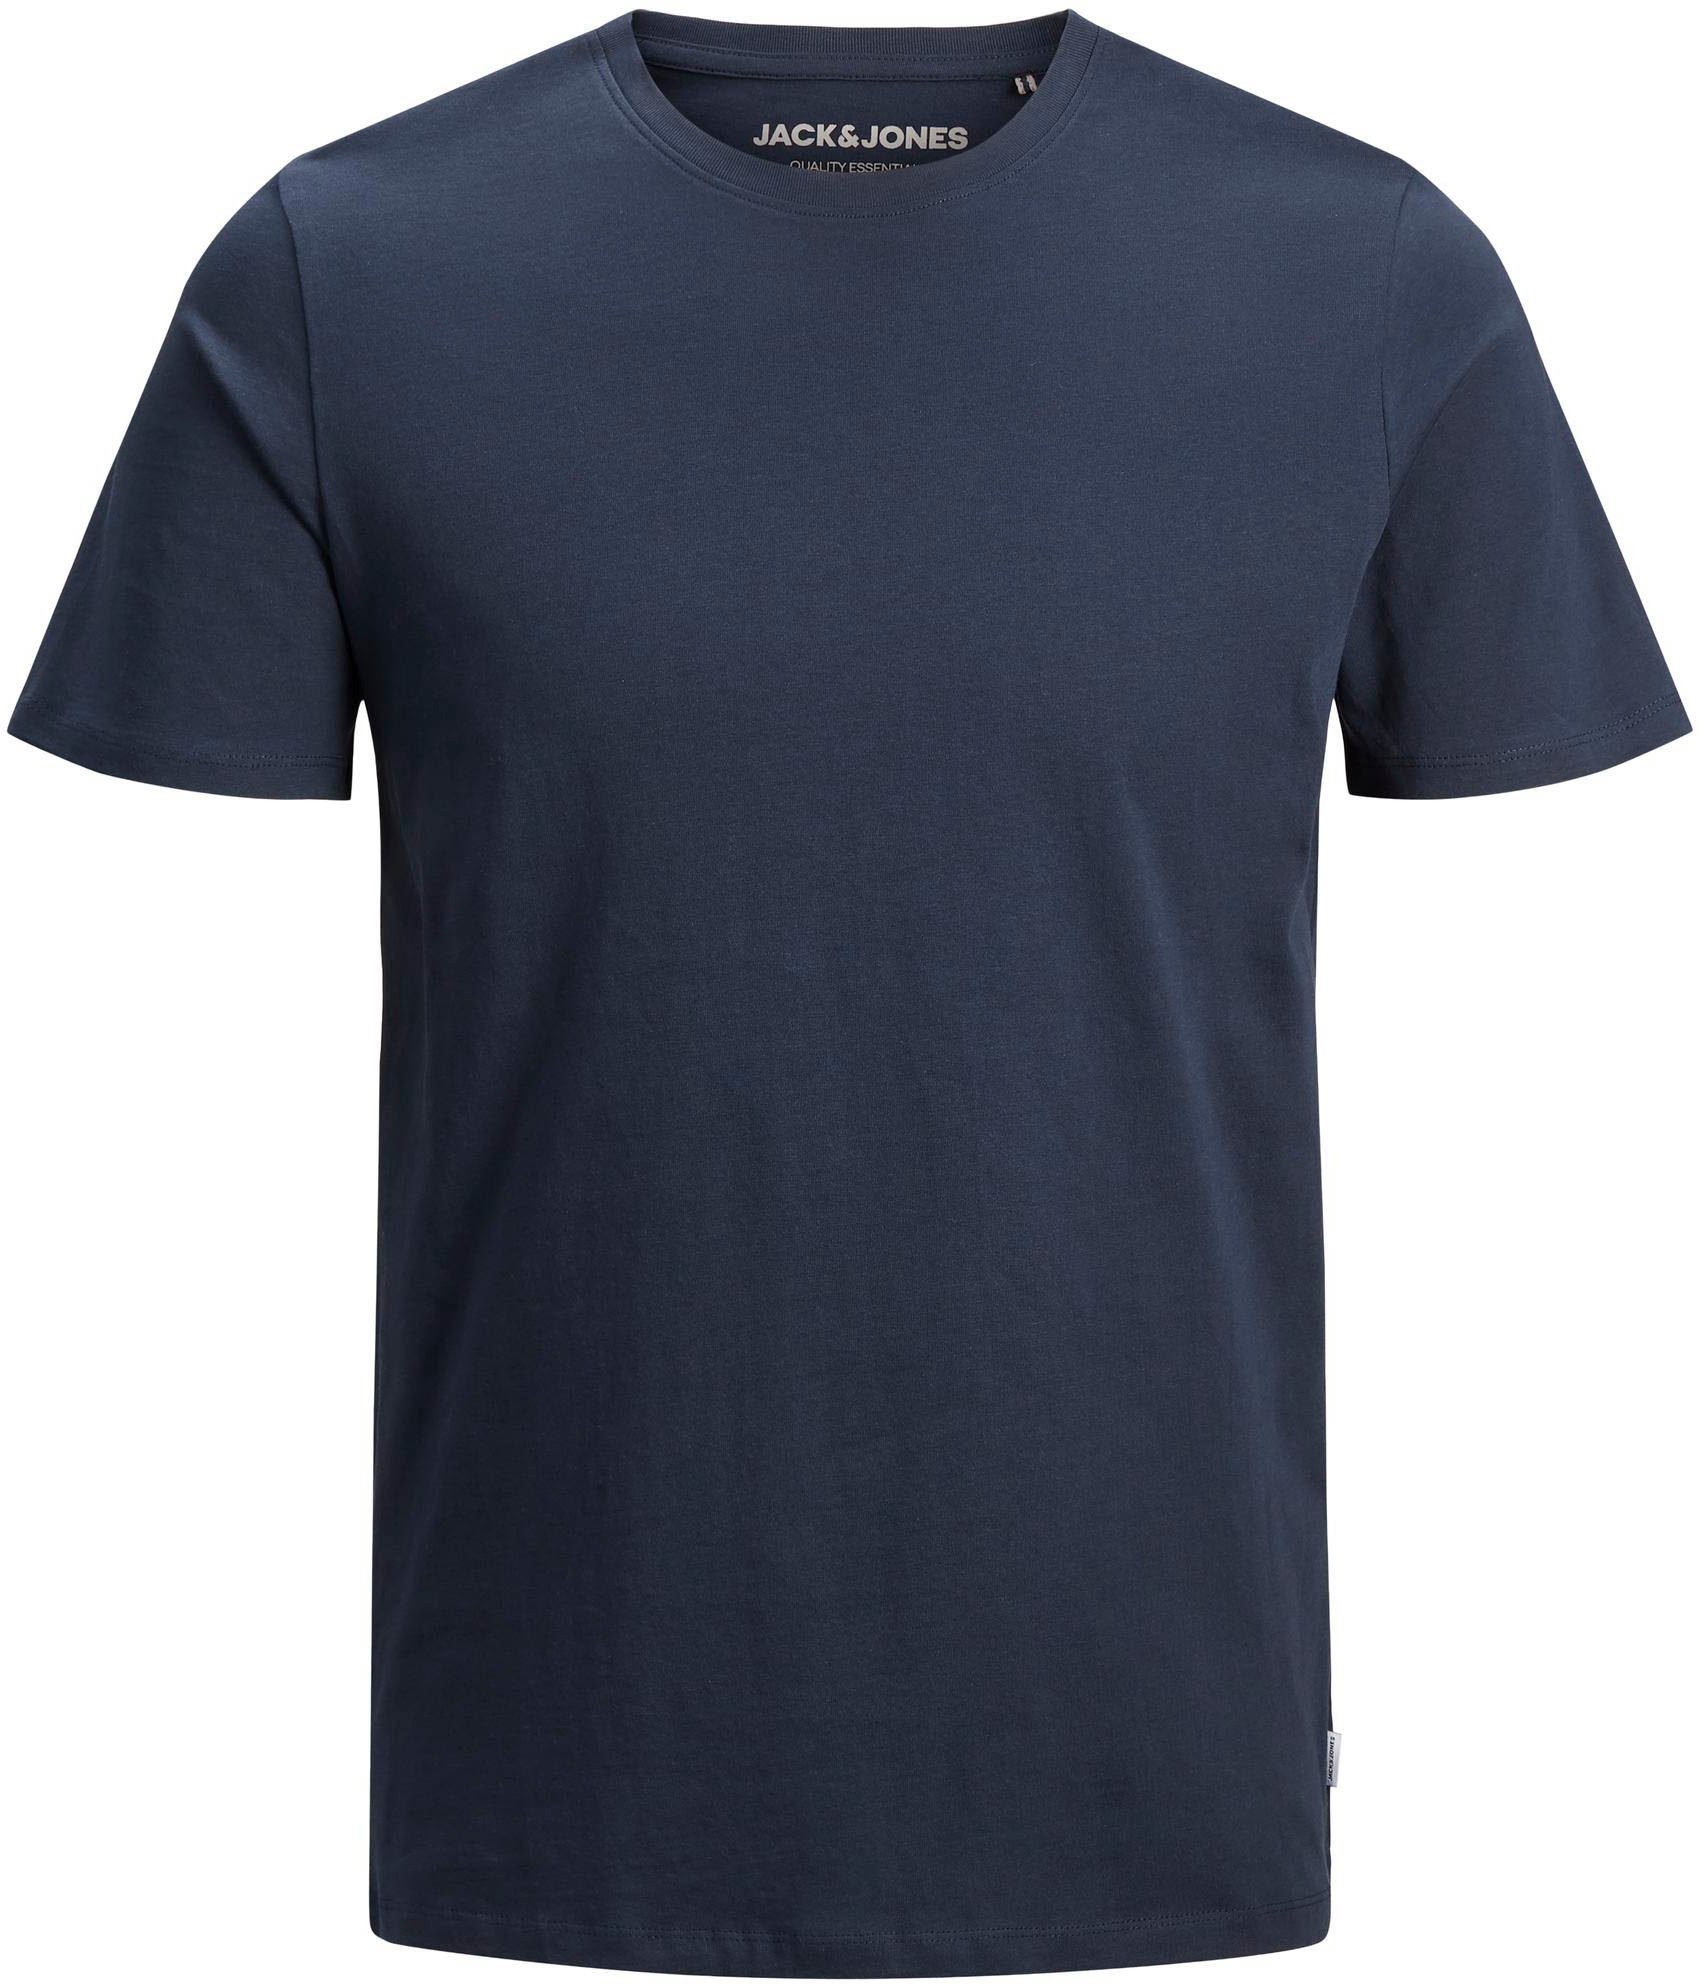 ORGANIC T-Shirt Jack TEE Jones navy BASIC &